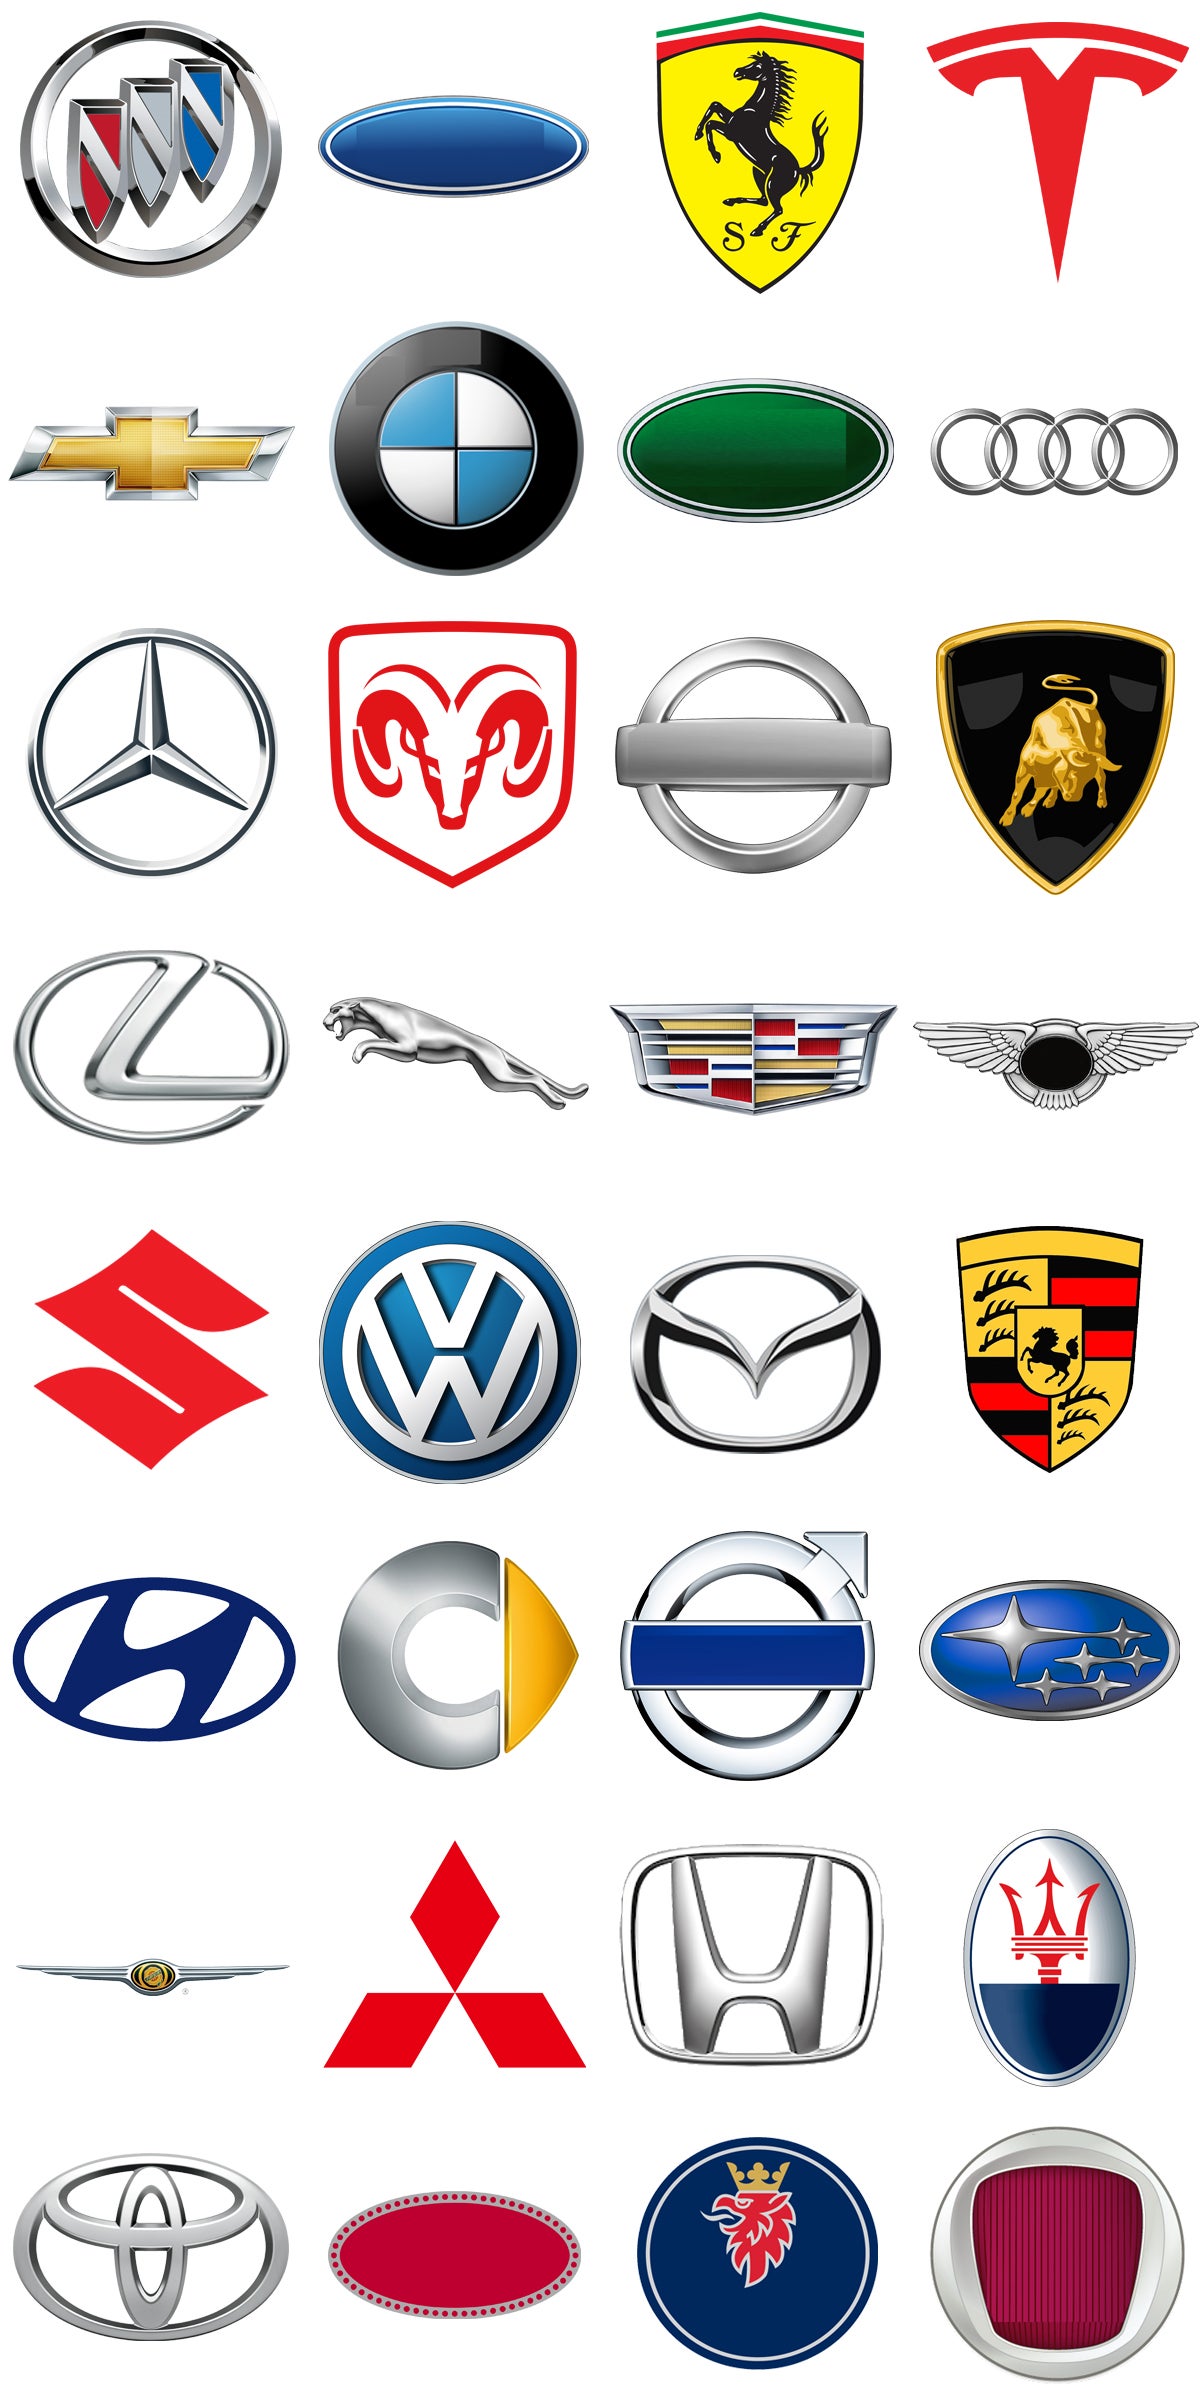 Car Logos With Their Names